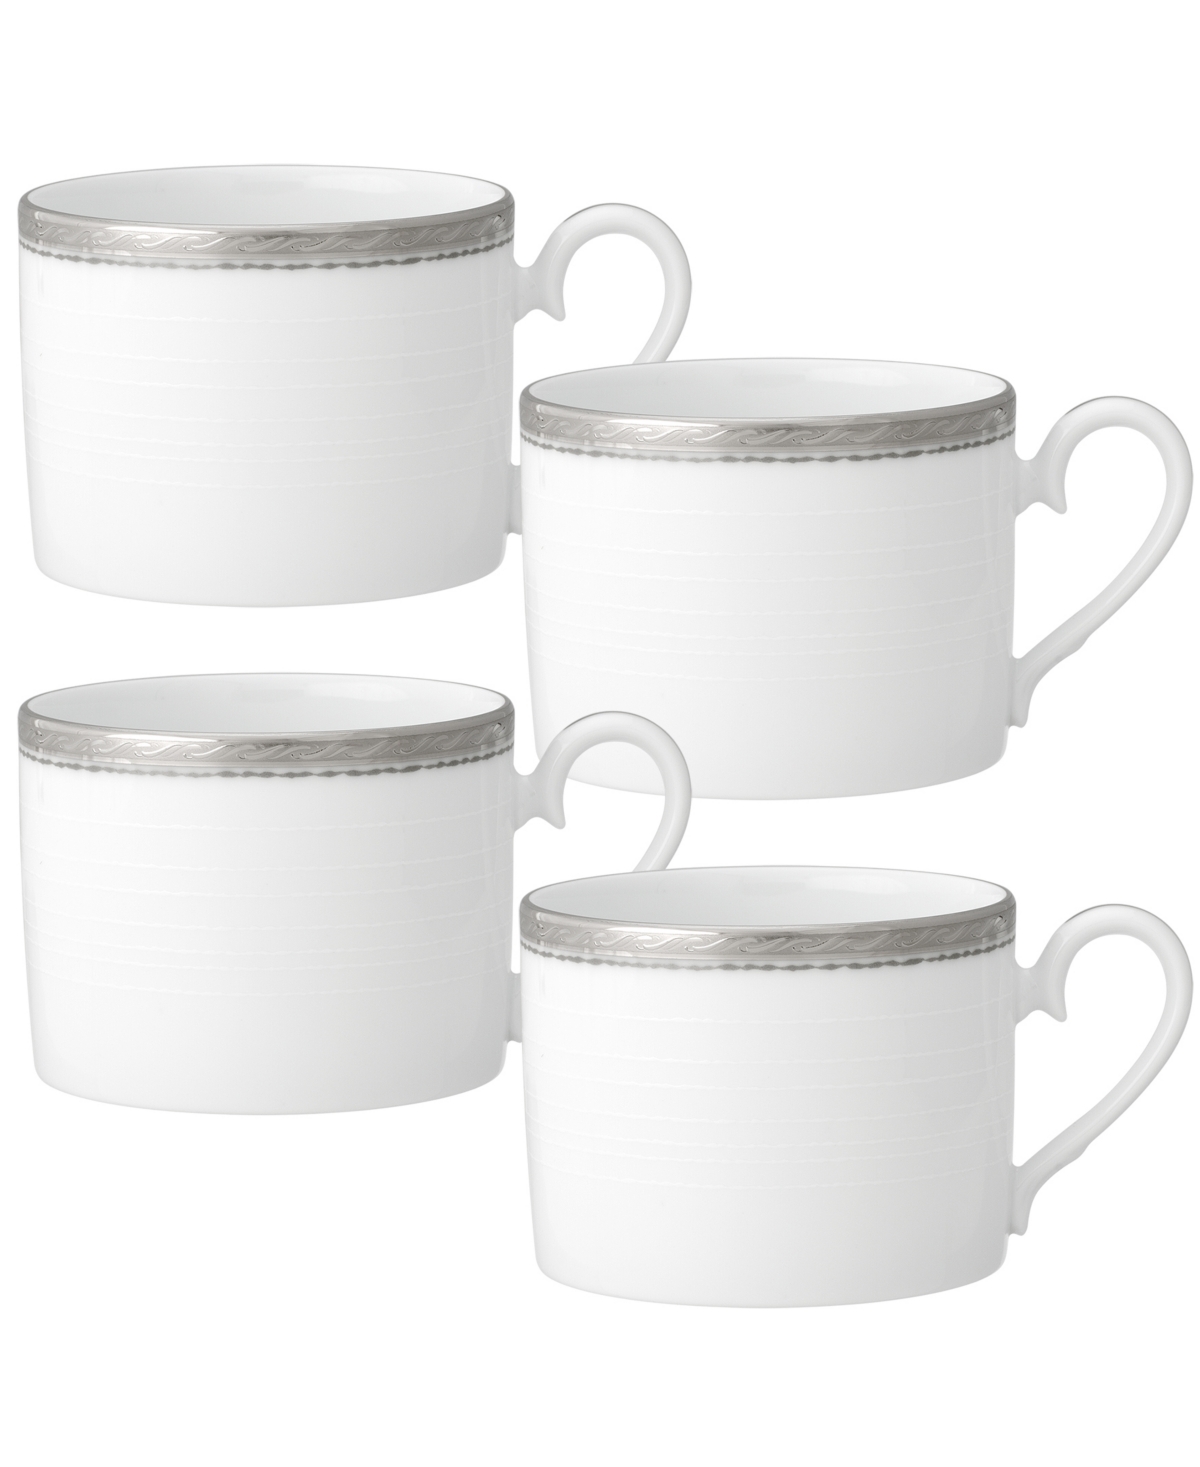 Noritake Whiteridge Platinum Set Of 4 Cups, 8-1/2 Oz. In White And Platinum